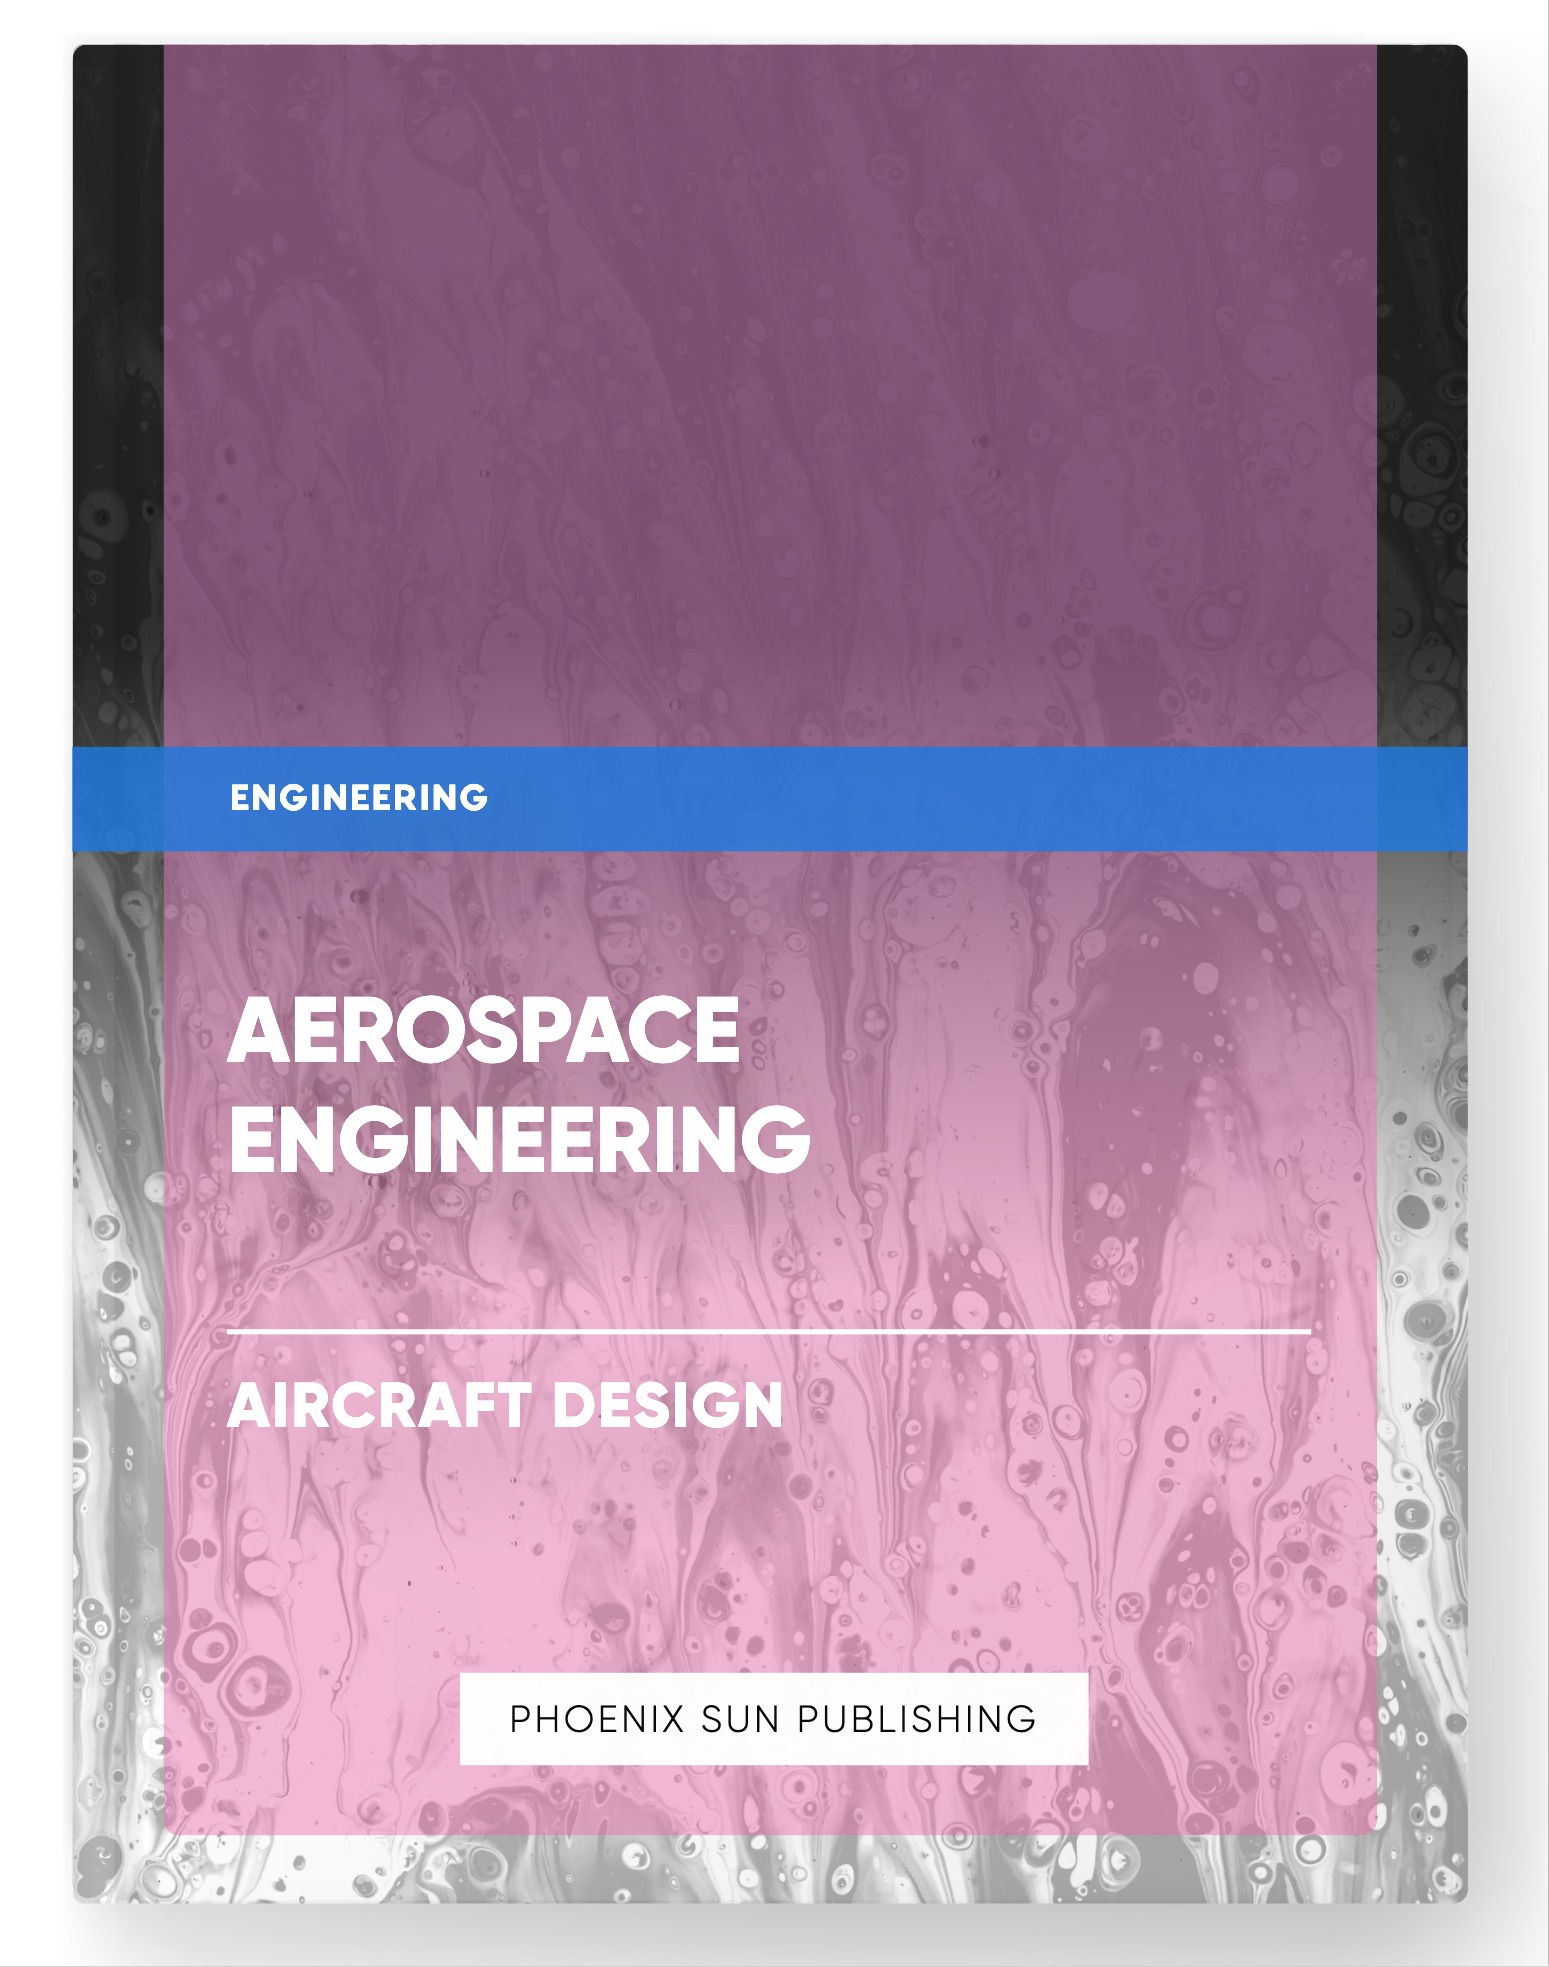 Aerospace Engineering – Aircraft Design